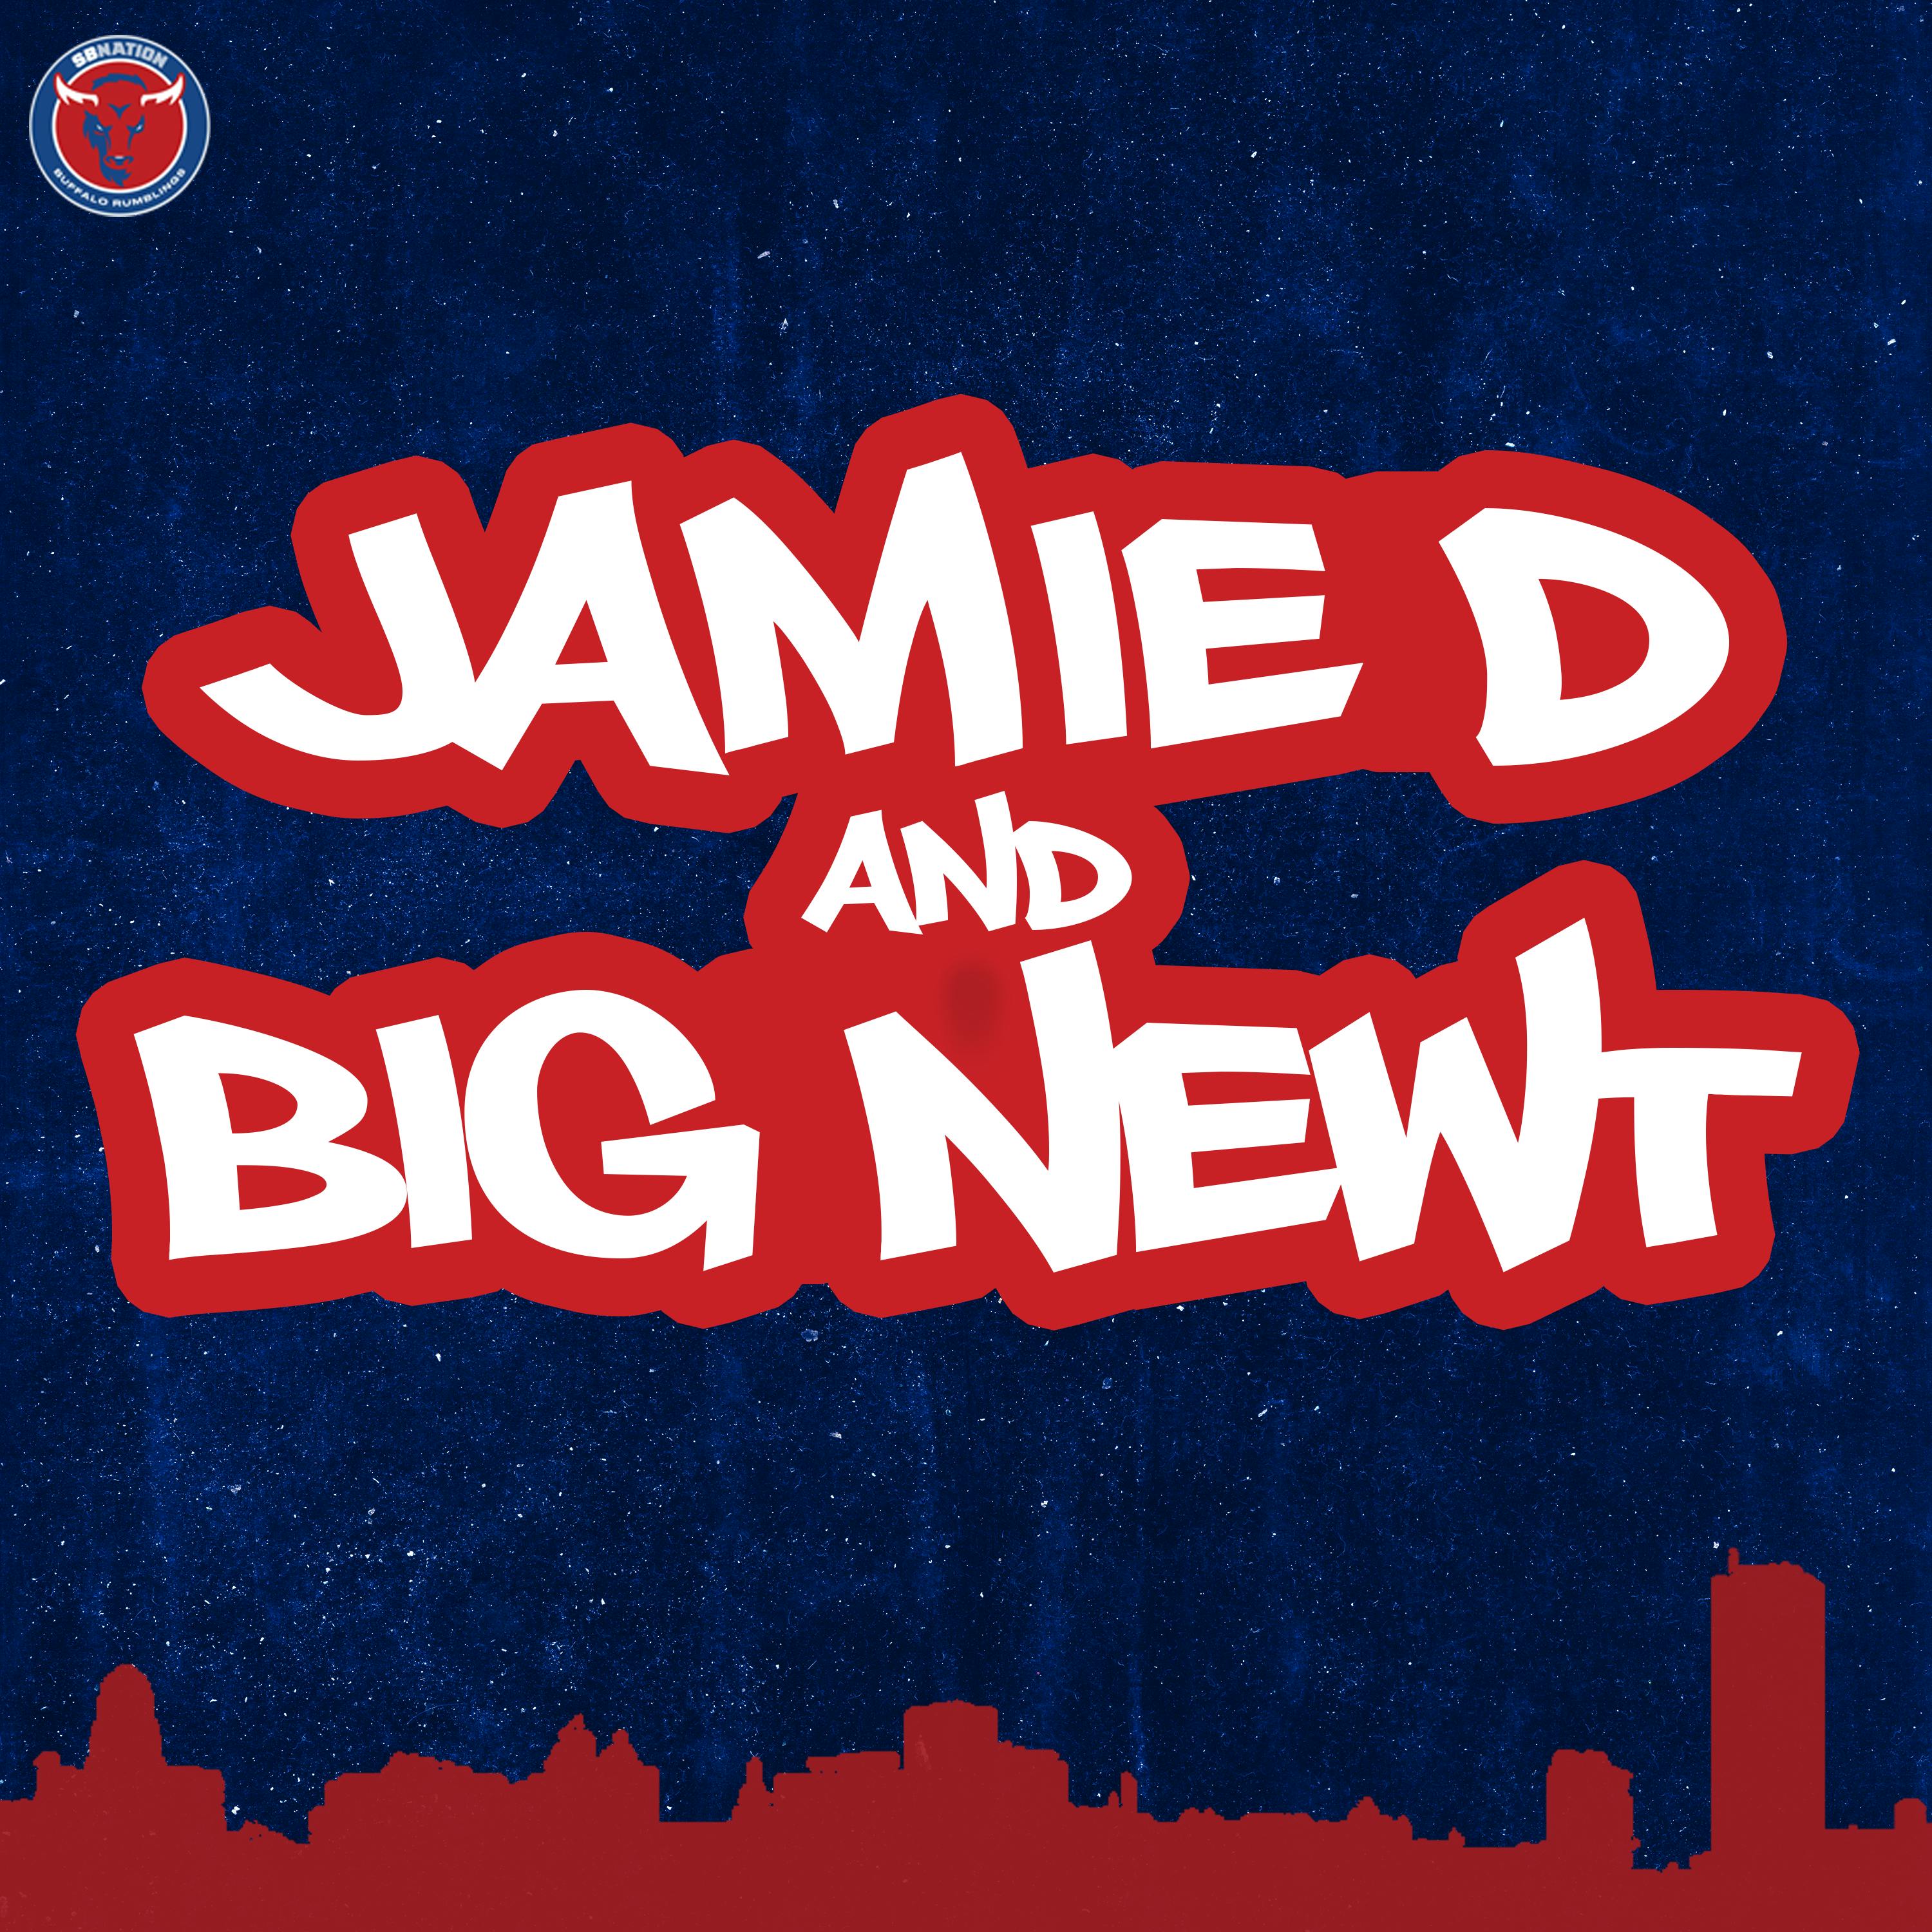 Jamie D & Big Newt: Training Camp Battles